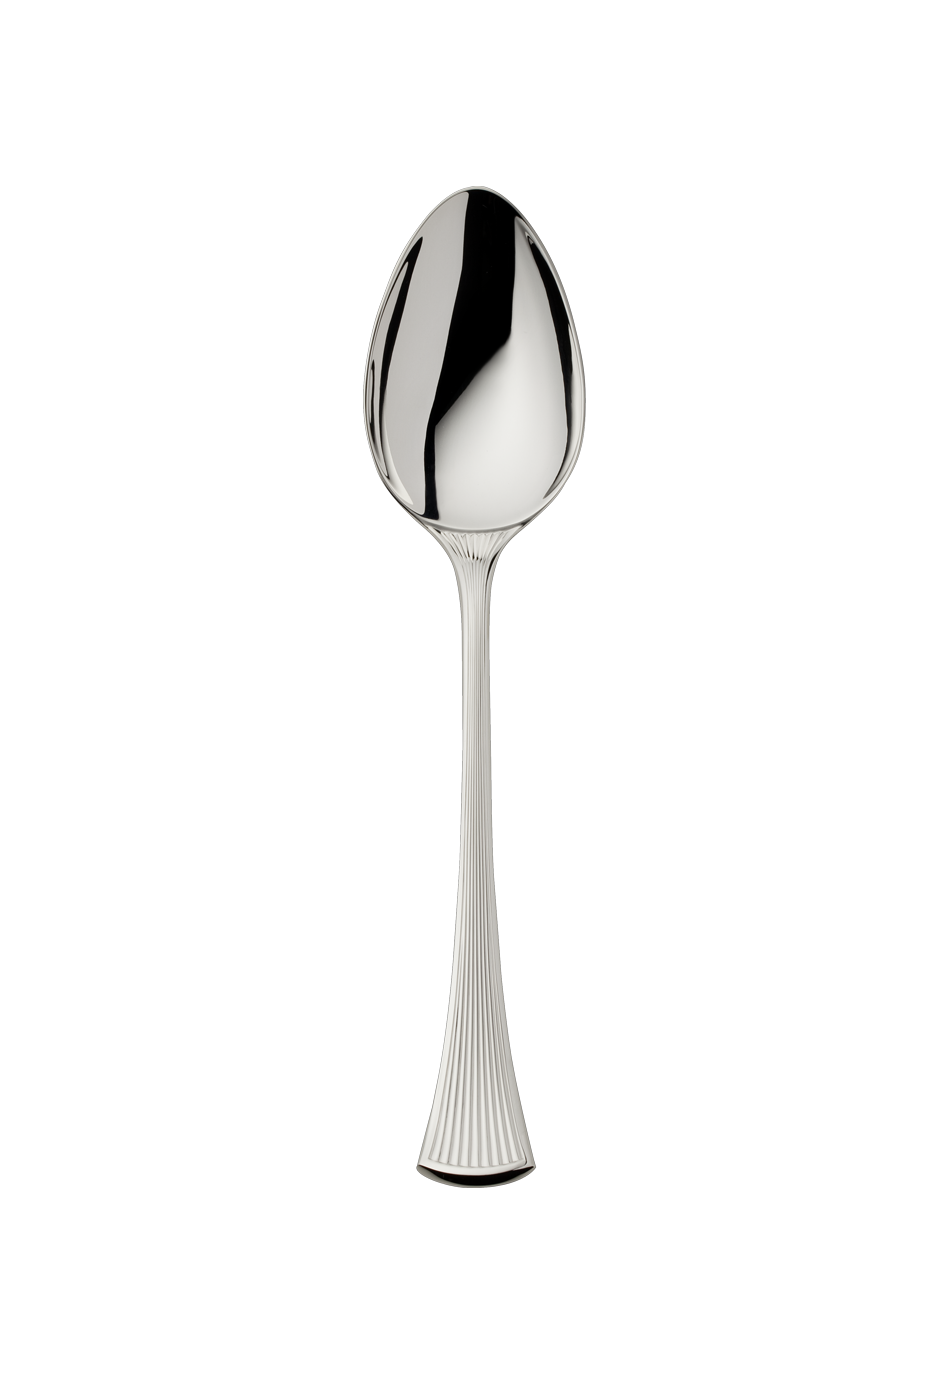 Avenue Table Spoon (150g massive silverplated)